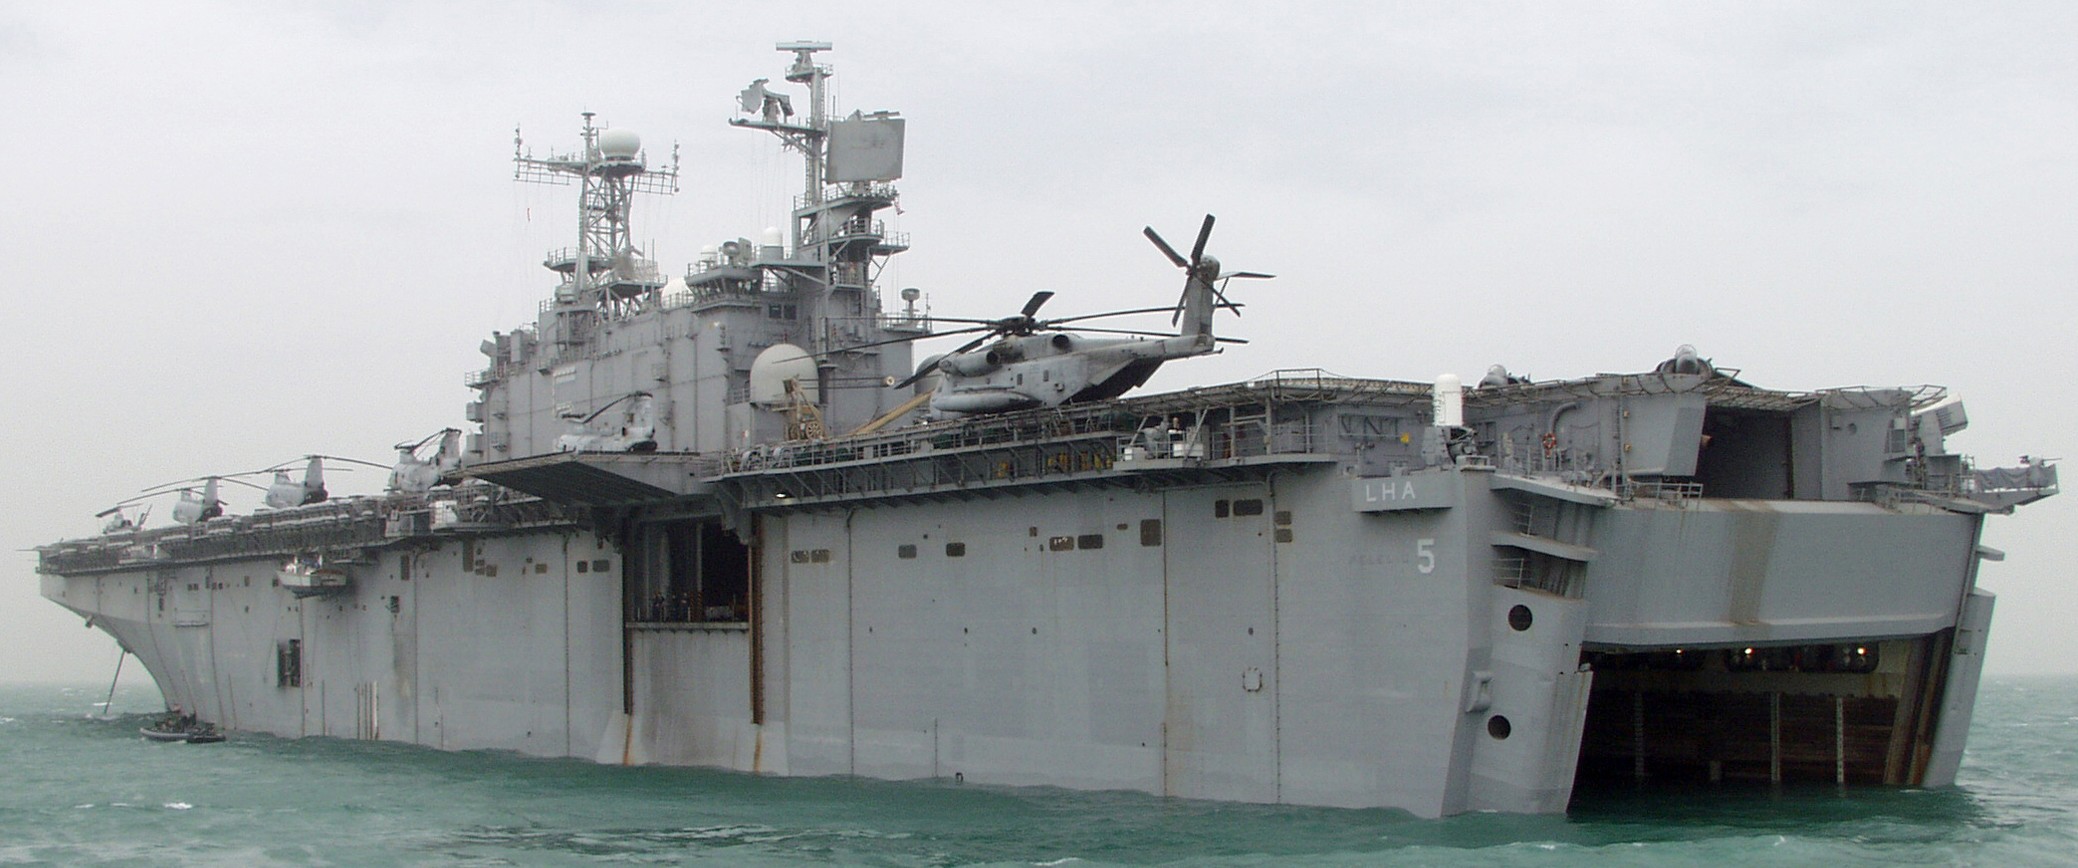 lha-5 uss peleliu tarawa class amphibious assault ship landing helicopter us navy hmm-163(rein) marines enduring freedom 03